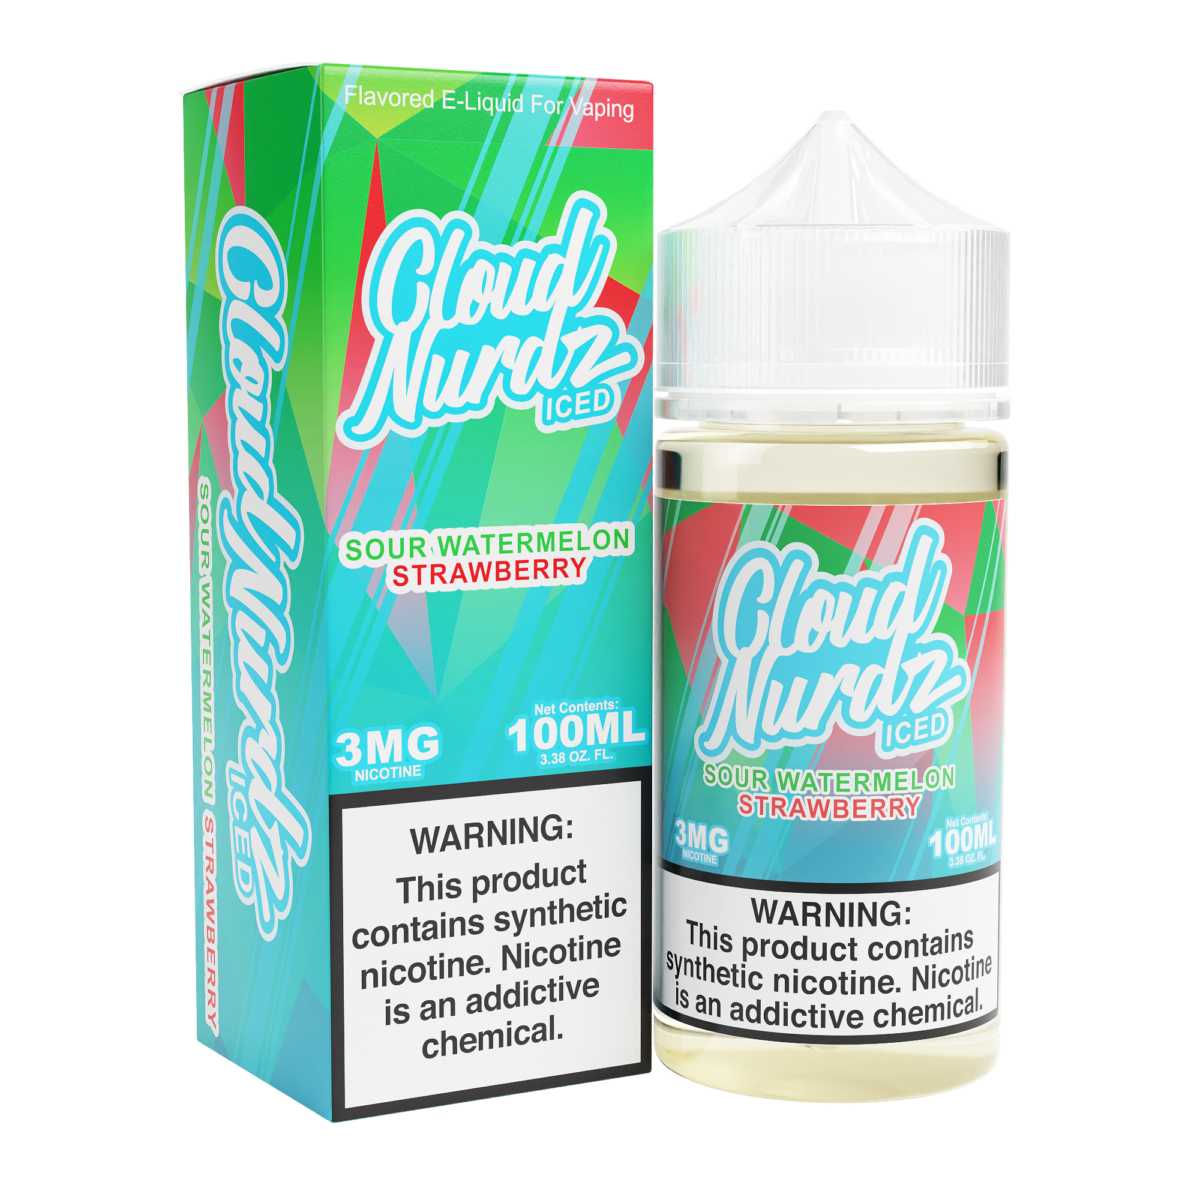 Cloud Nurdz Series E-Liquid 100mL Sour Watermelon Strawberry Ice with packaging